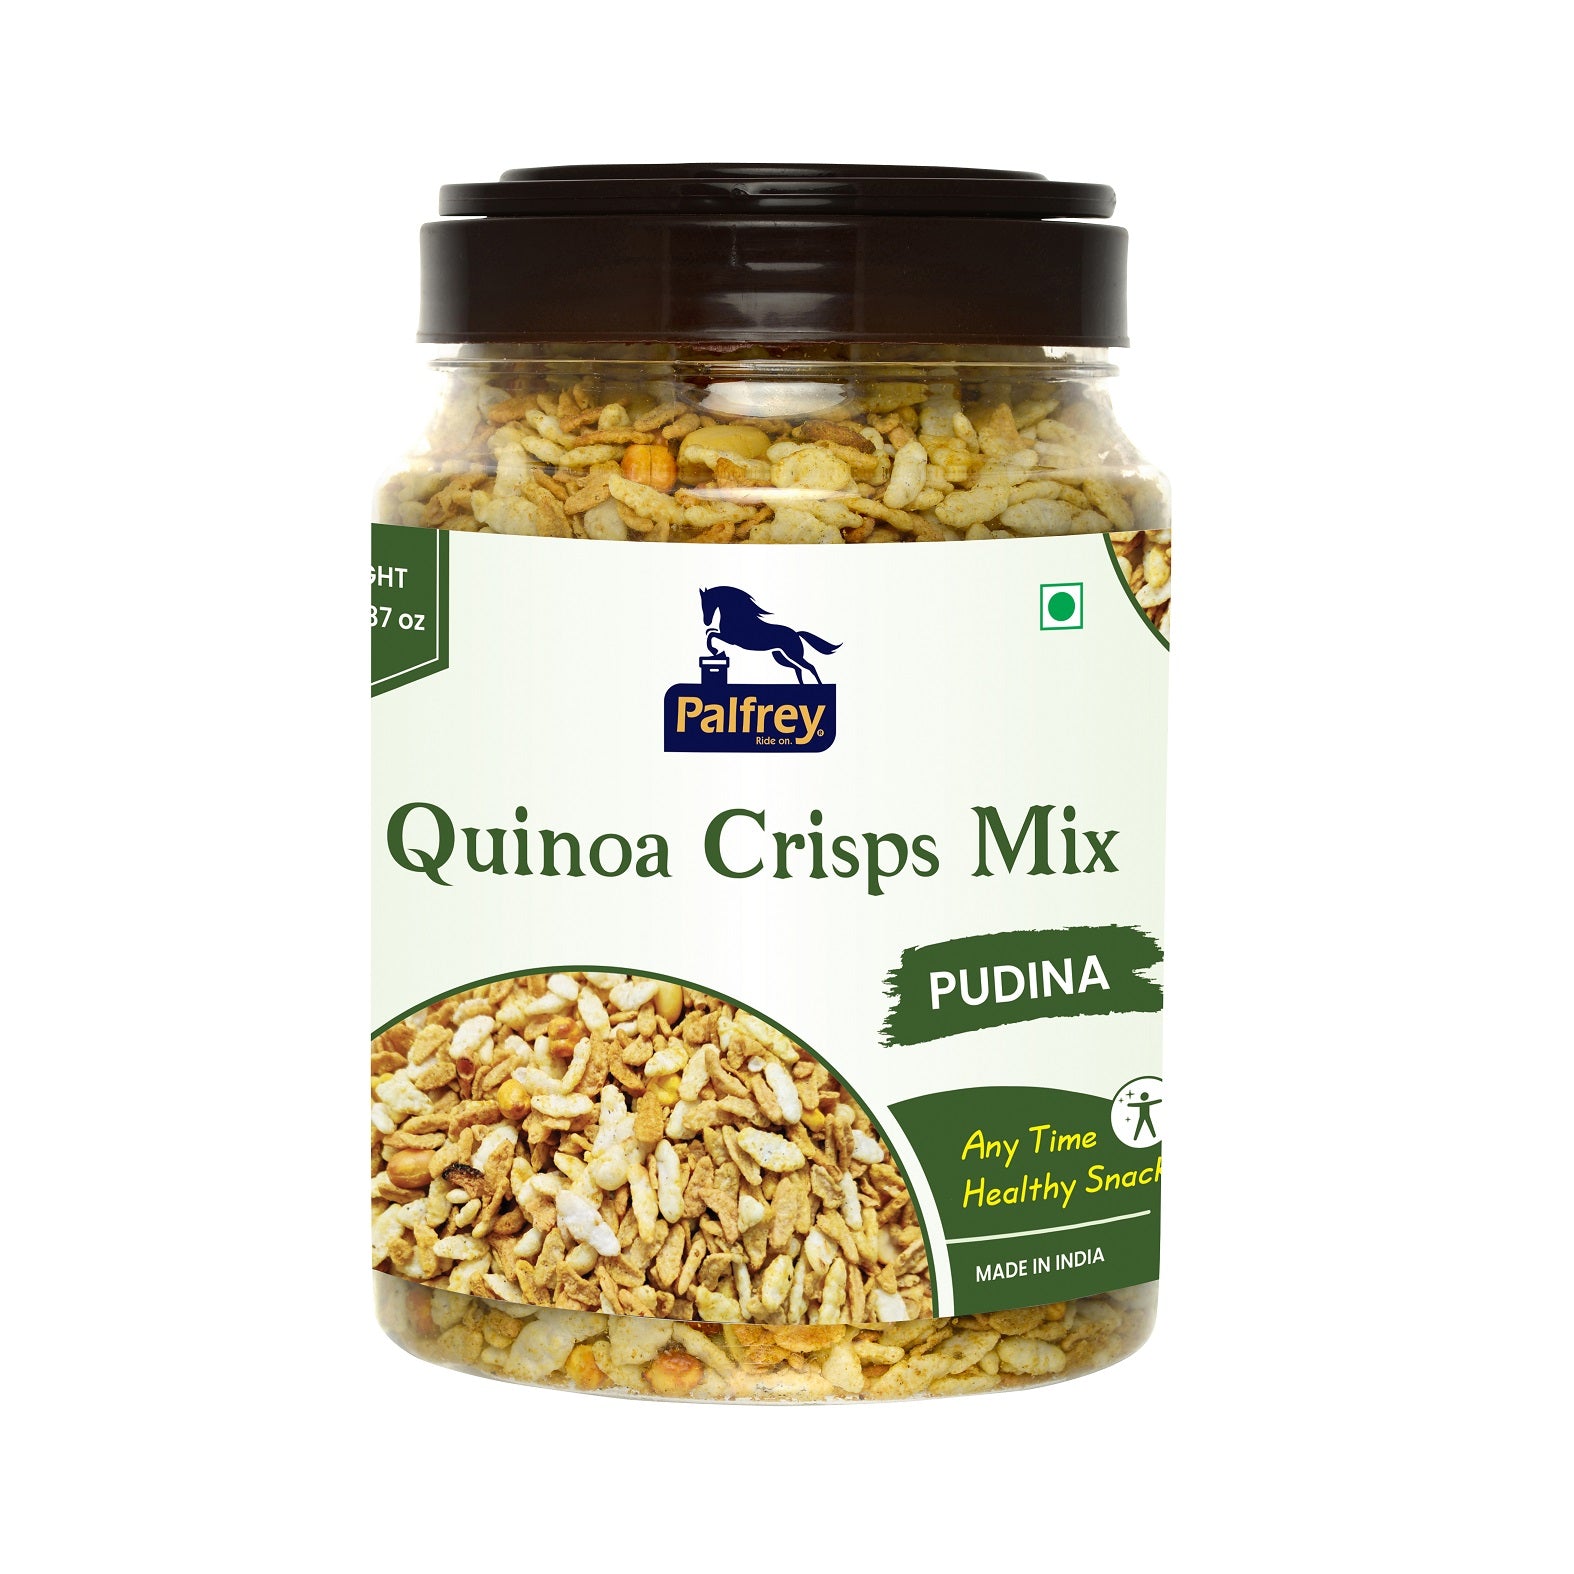 Palfrey Quinoa Crisps Mix Pudina 450g